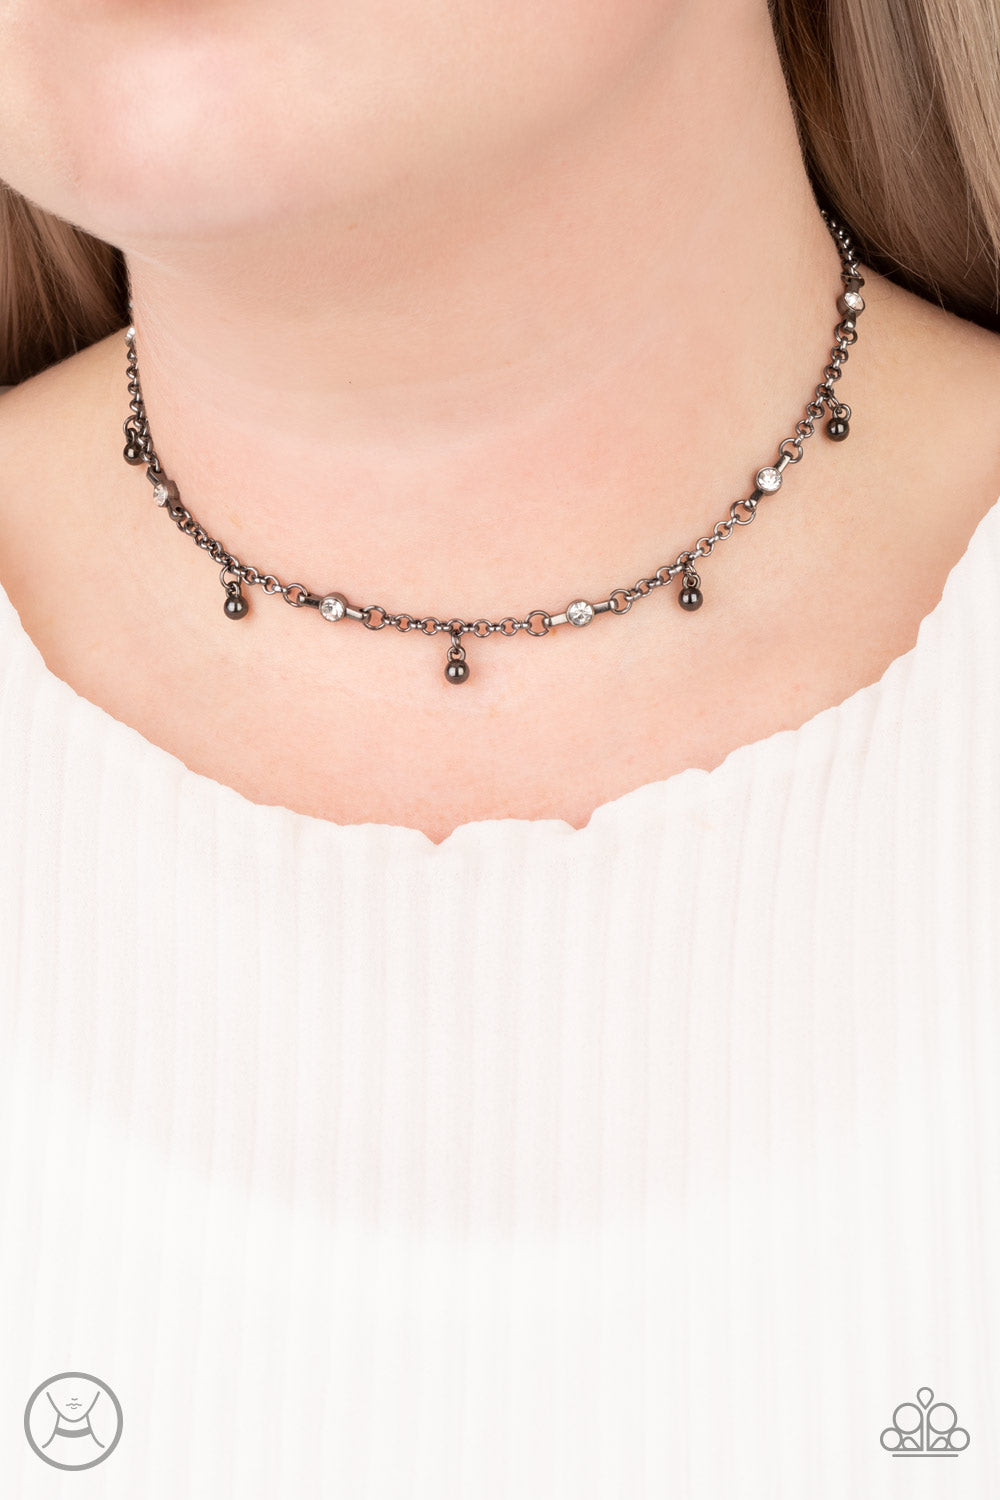 What A Stunner - Black Choker Necklace Set - Princess Glam Shop